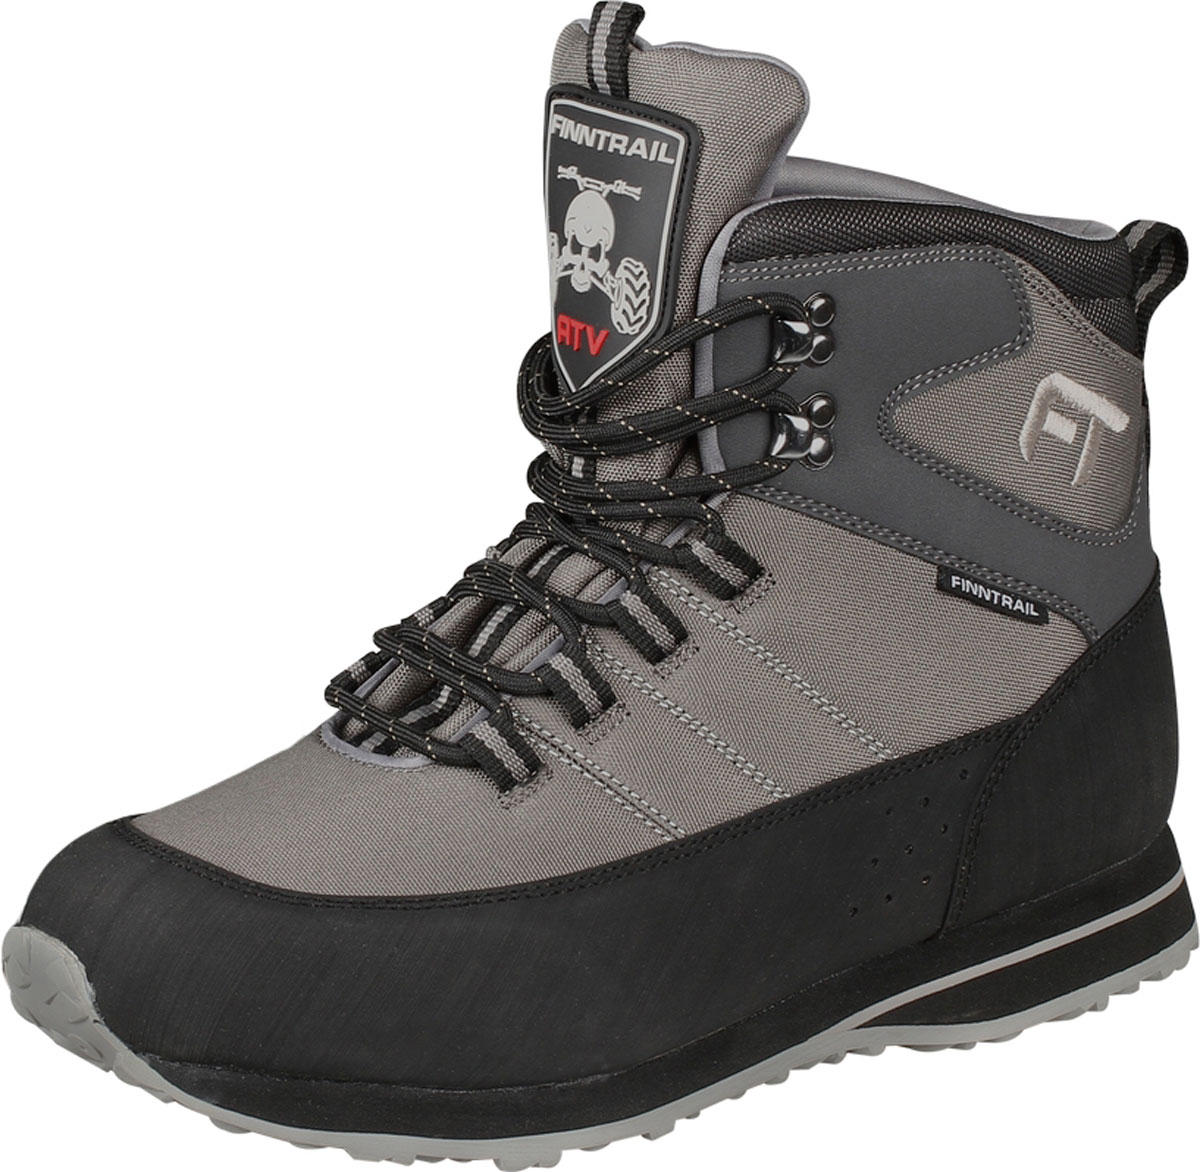 Ботинки для рыбалки Finntrail New Stalker, цвет: серый, черный. 5192. Размер 45